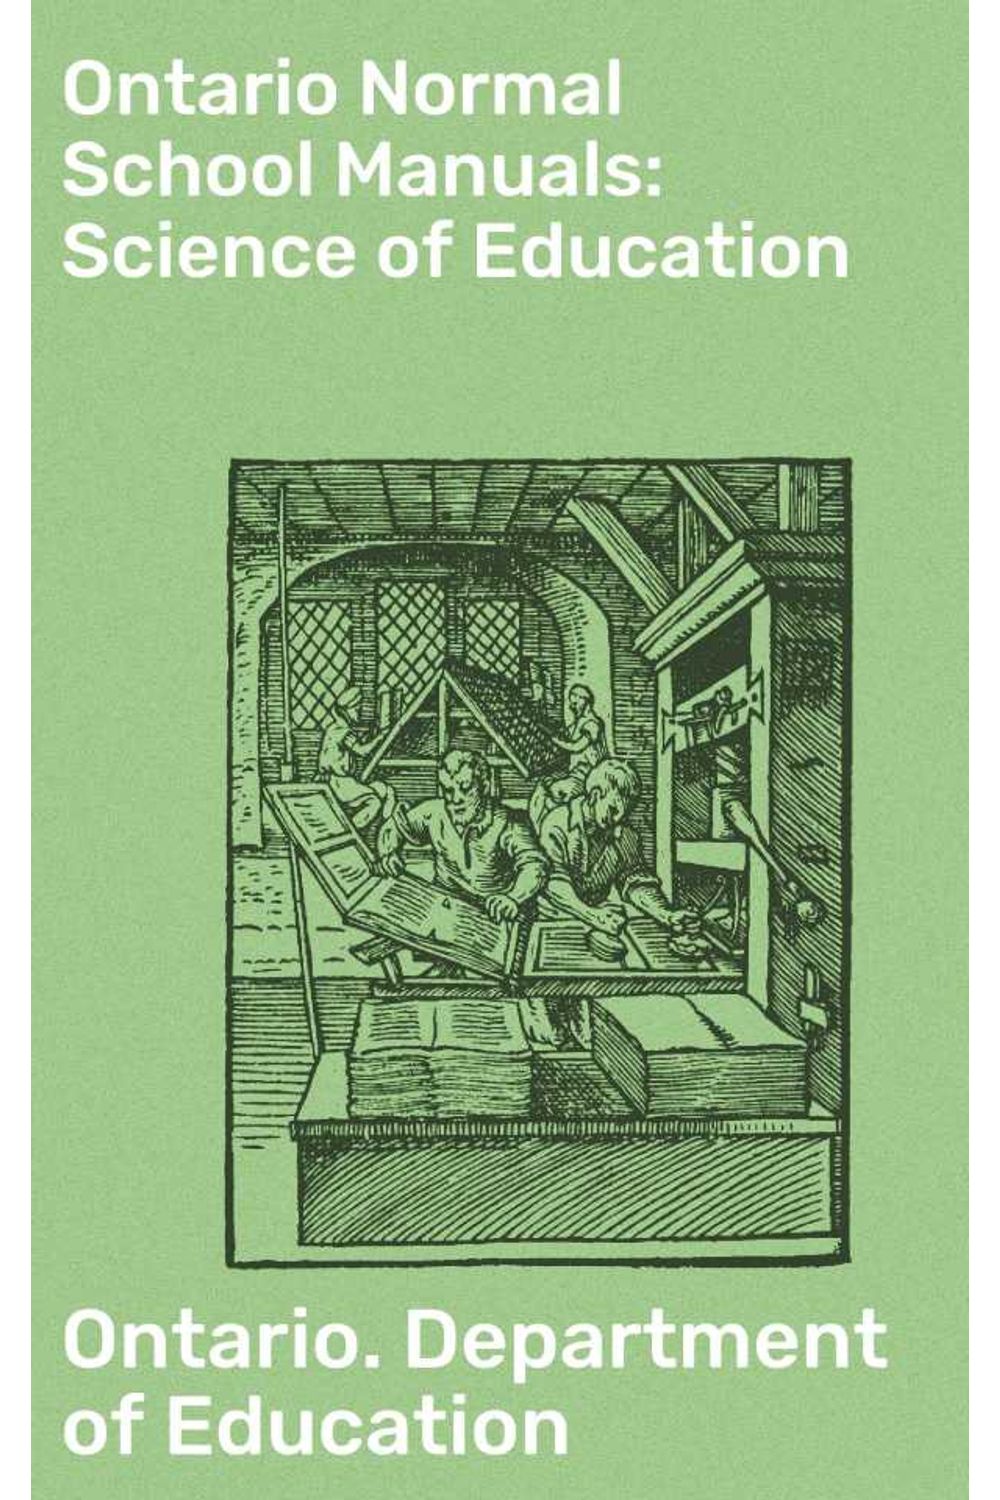 bw-ontario-normal-school-manuals-science-of-education-good-press-4064066194727